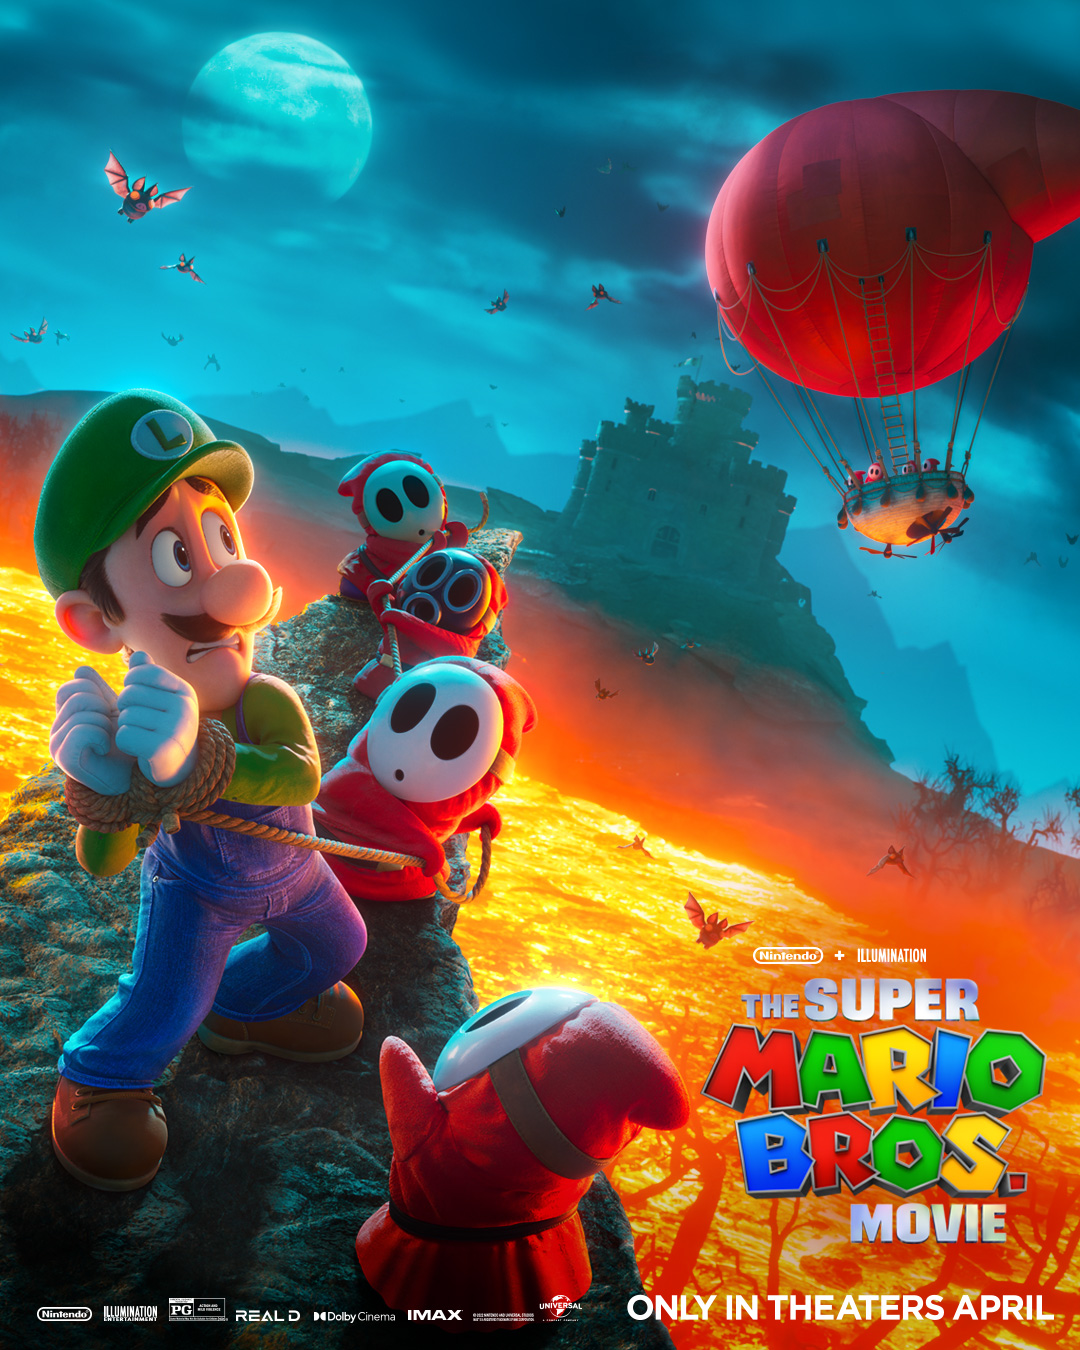 The Super Mario Bros. movie poster